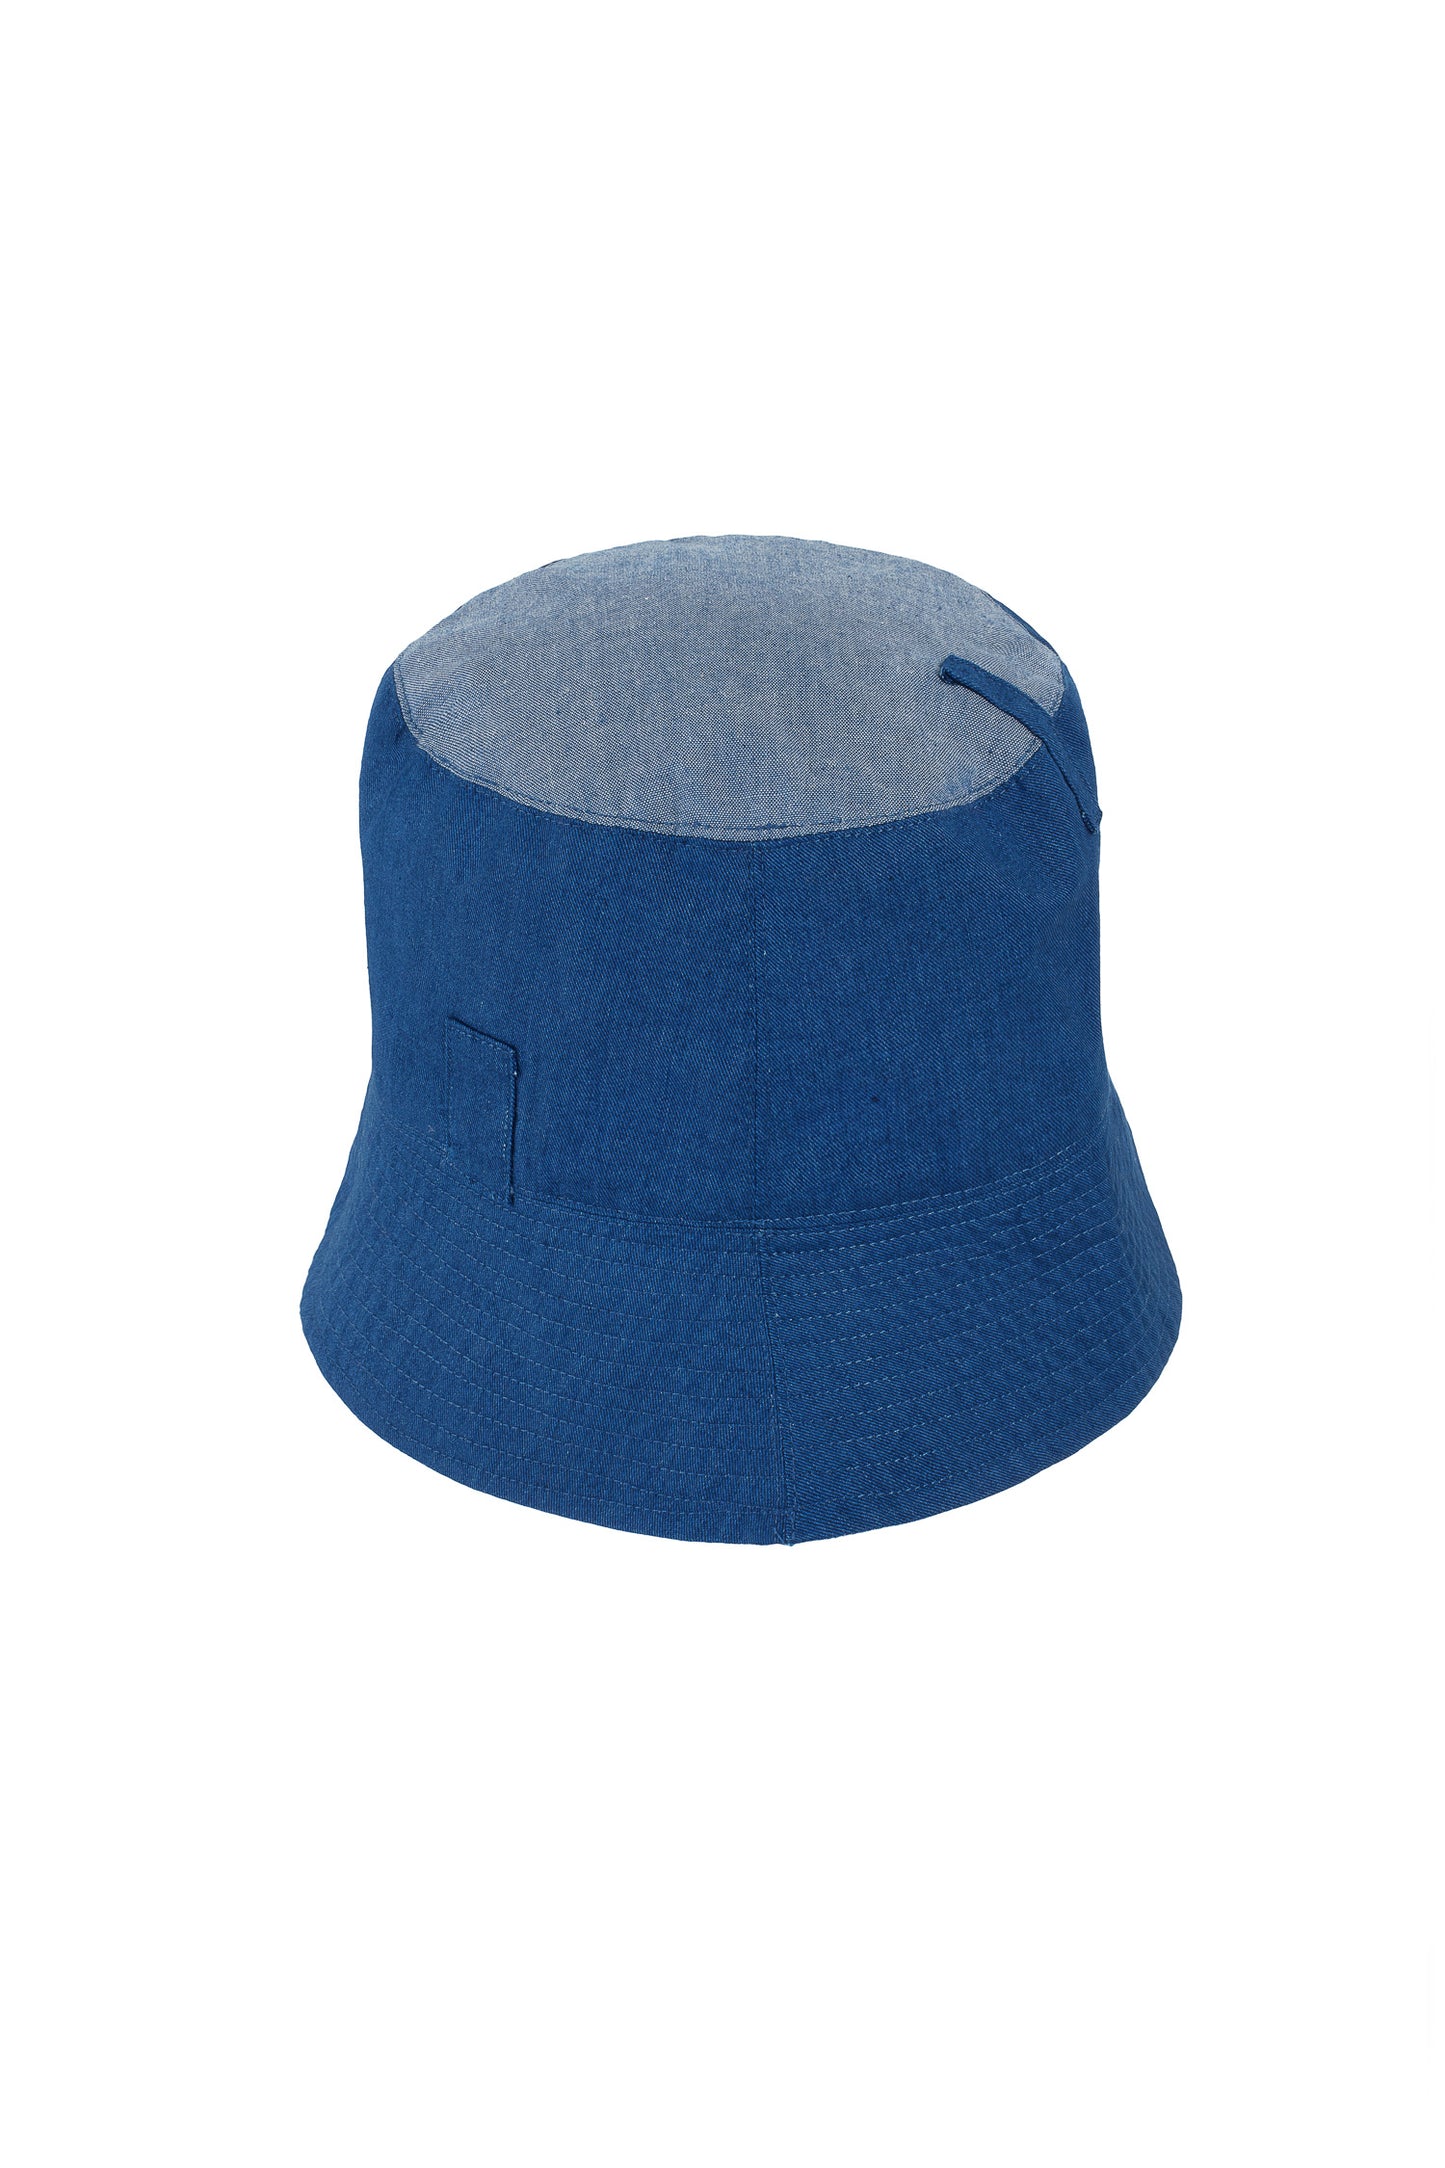 Japanese denim bucket hat by Saywood. Rich natural indigo reversible bucket hat, unisex.